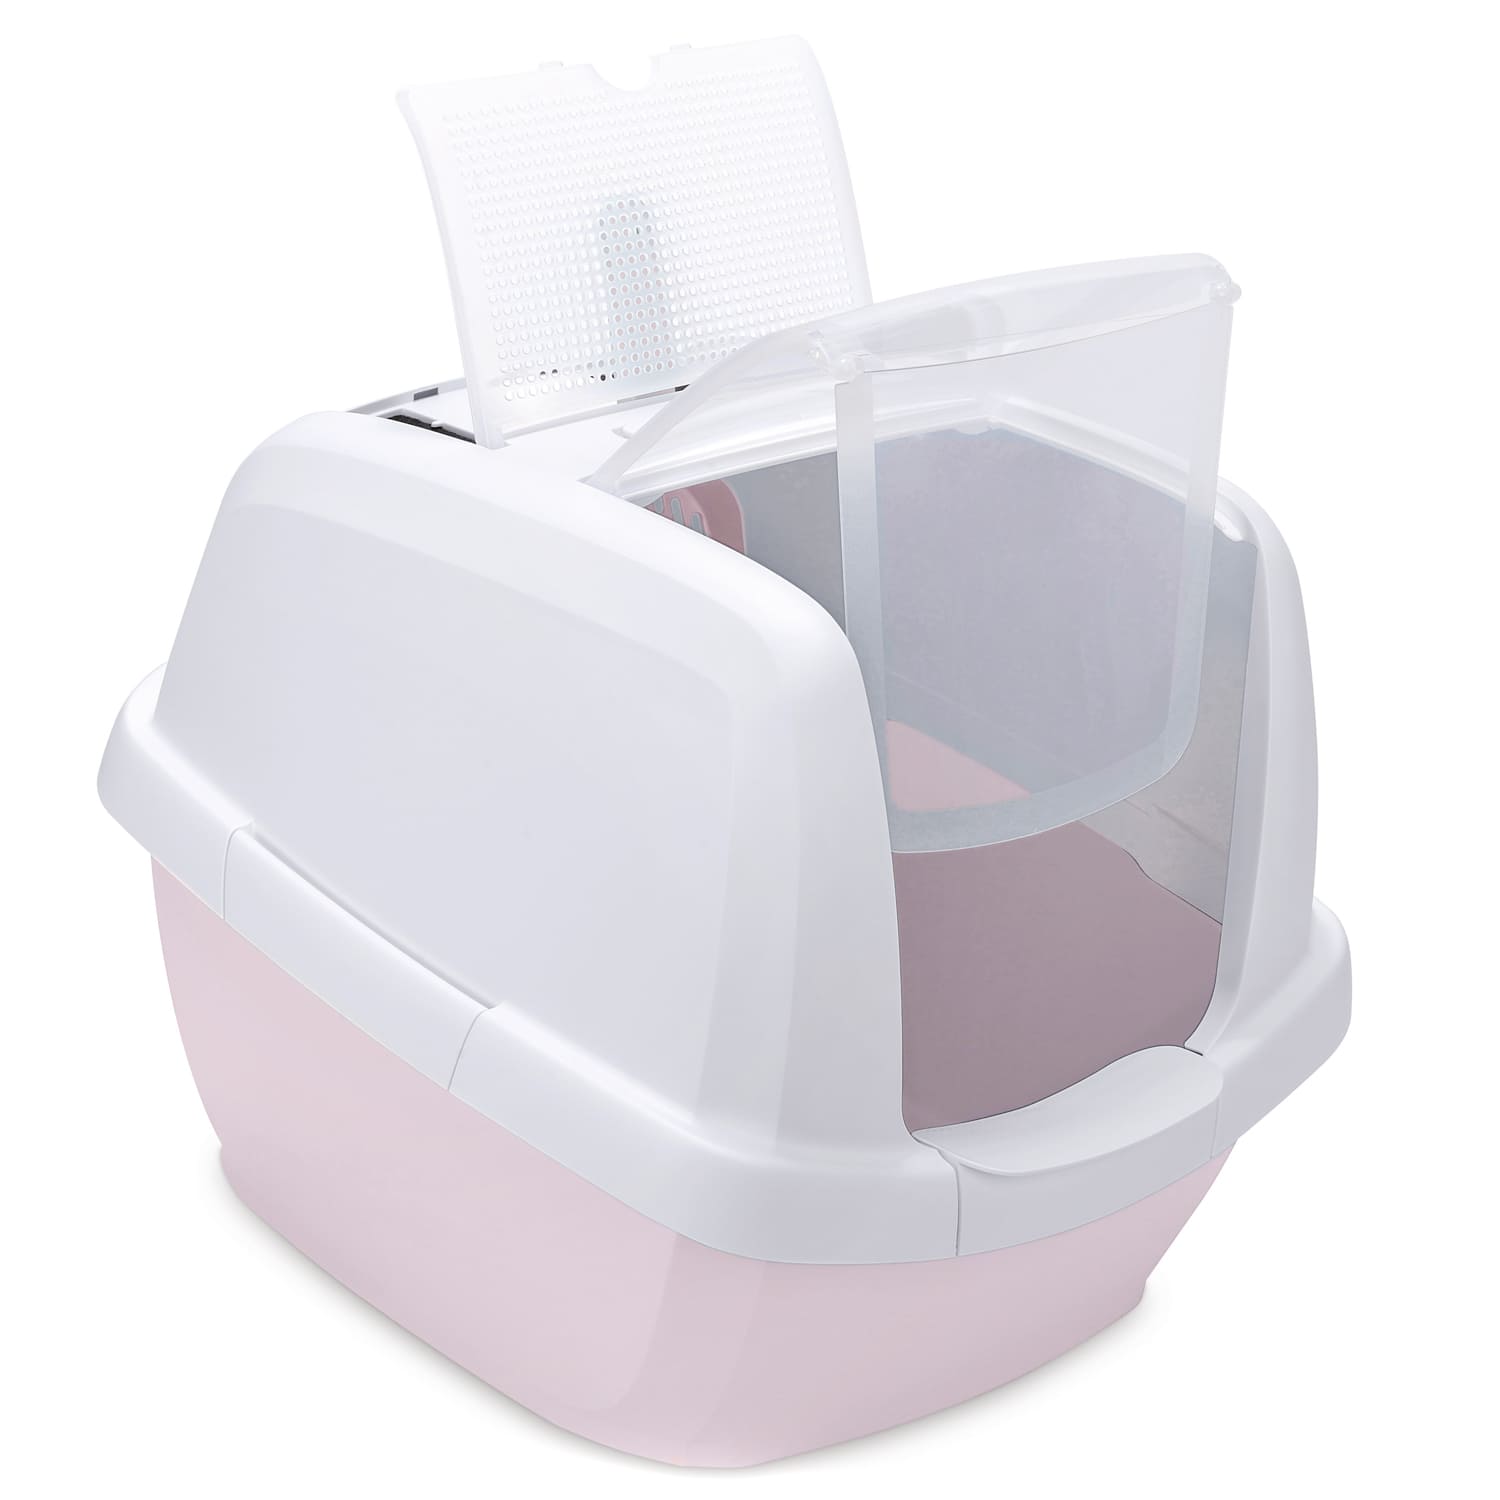 IMAC био-туалет для кошек MADDY 62х49,5х47,5h см, белый/нежно-розовый